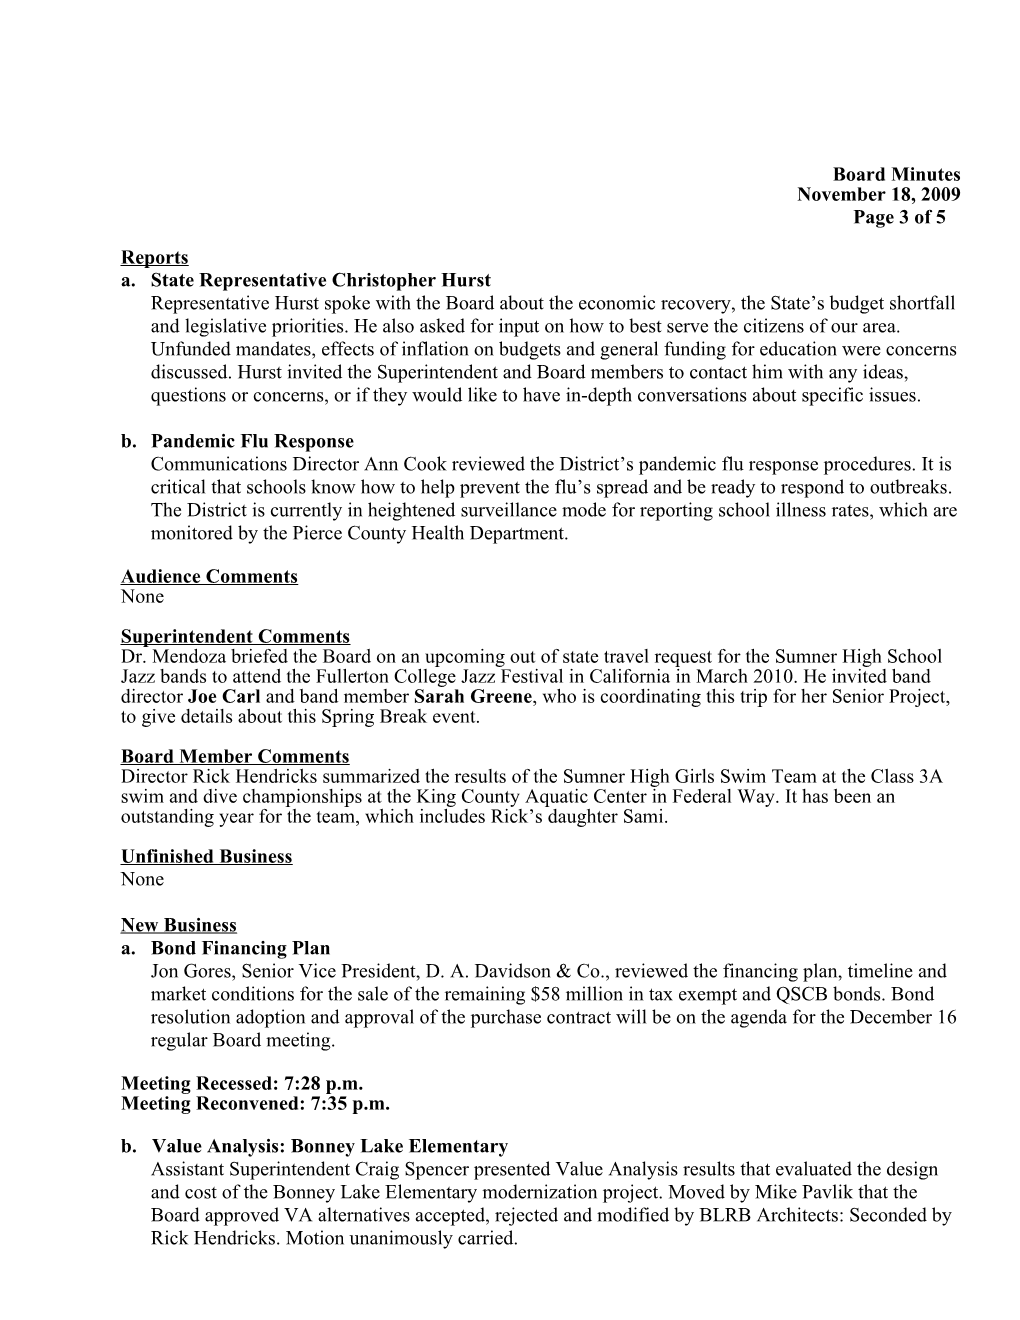 Minutes of Regular Board Meeting of November 18, 2009